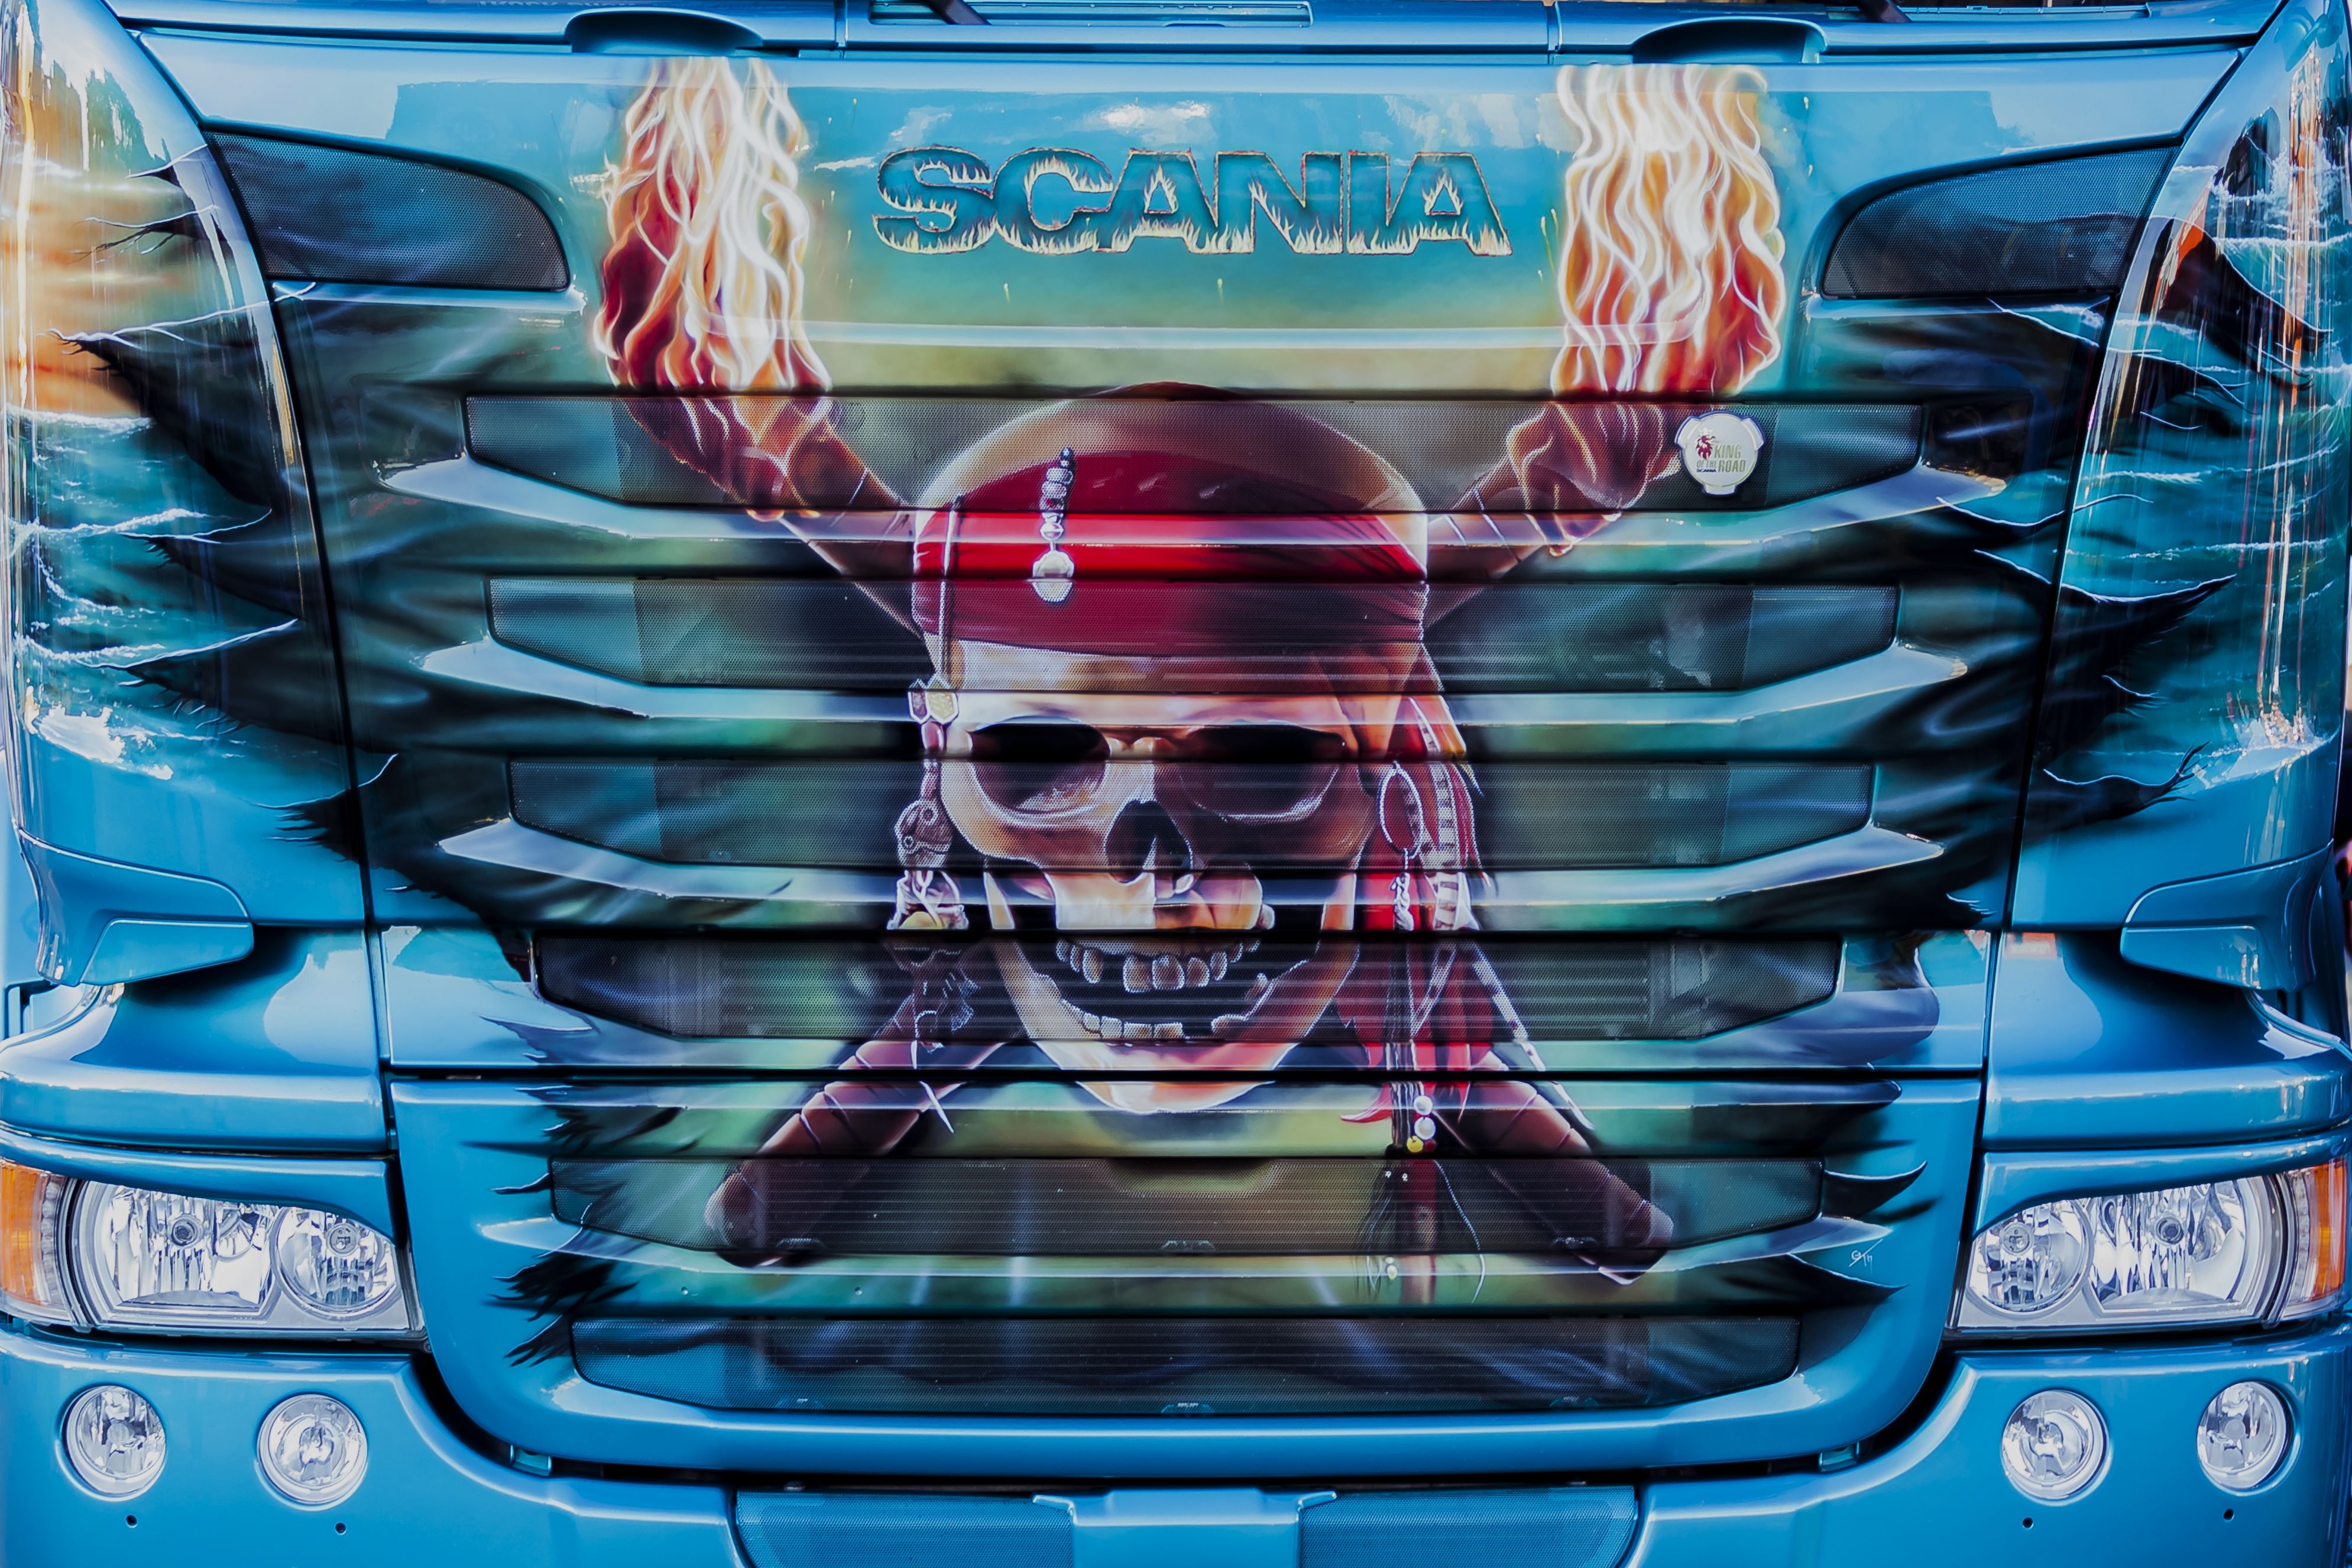 Scania Wallpaper High Resolution Scania Truck Logo Background